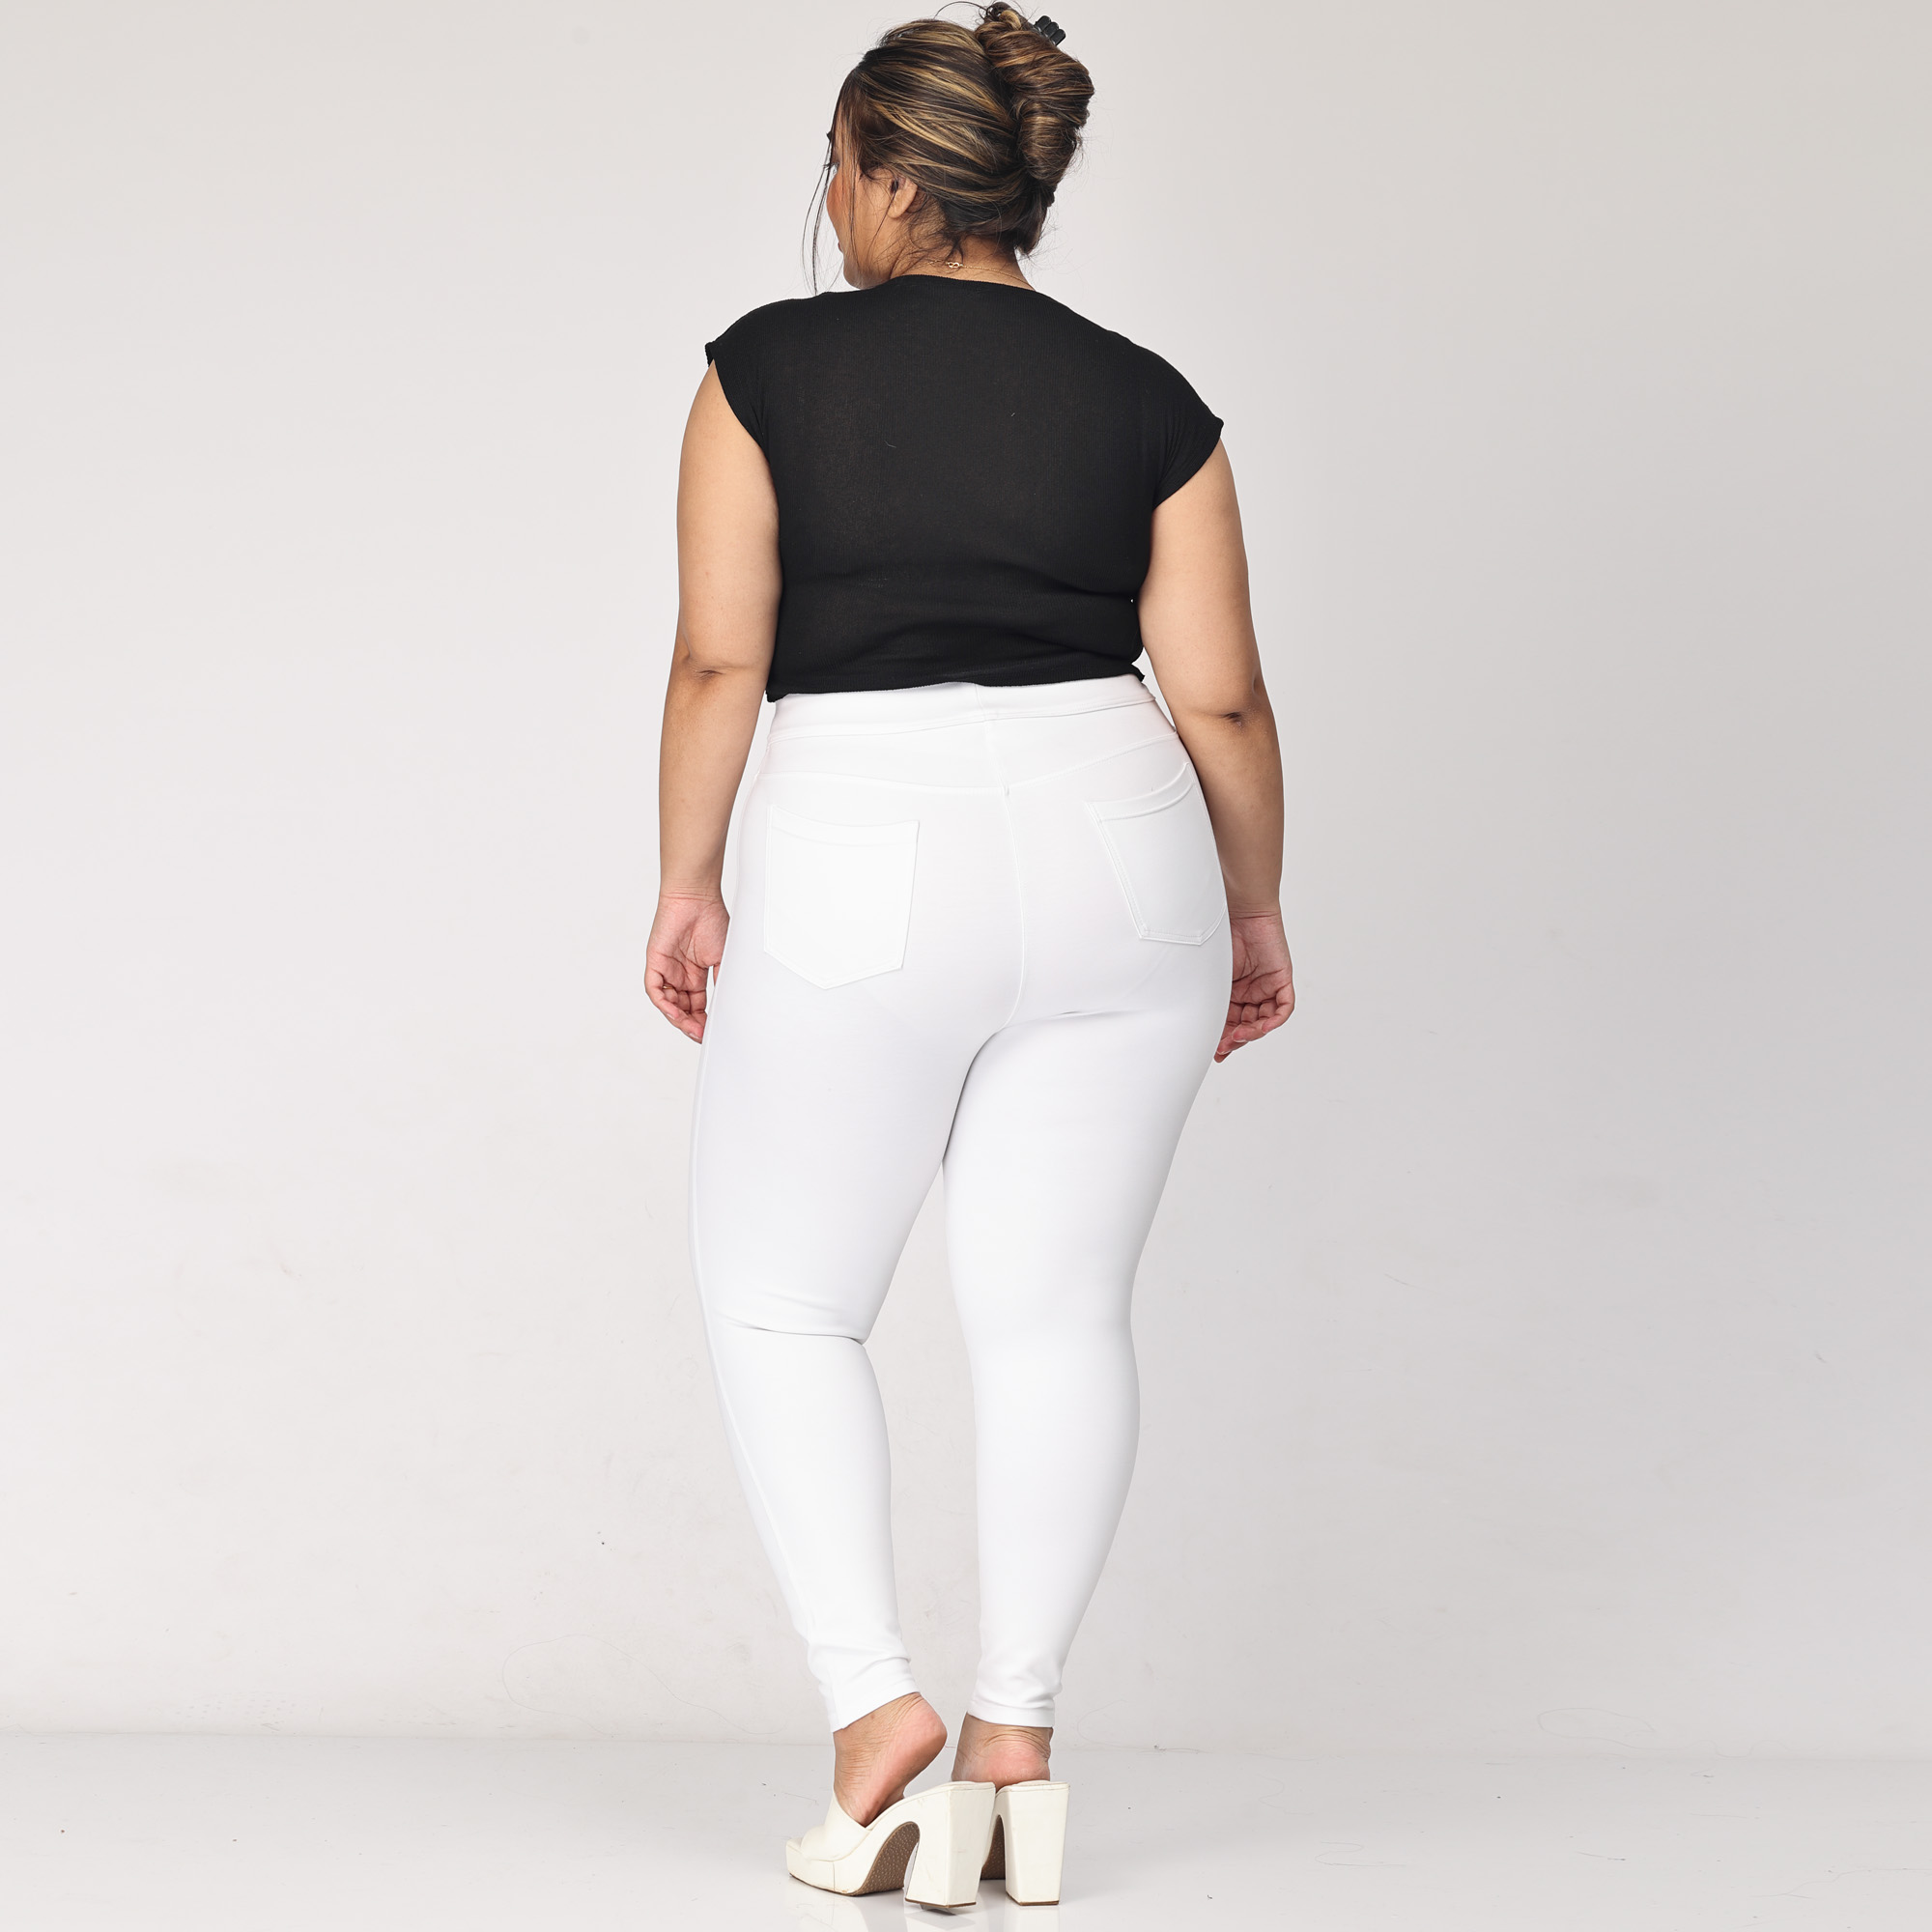 Buy Belore Slims Women Black Cotton Spandex Ankle Length Tummy